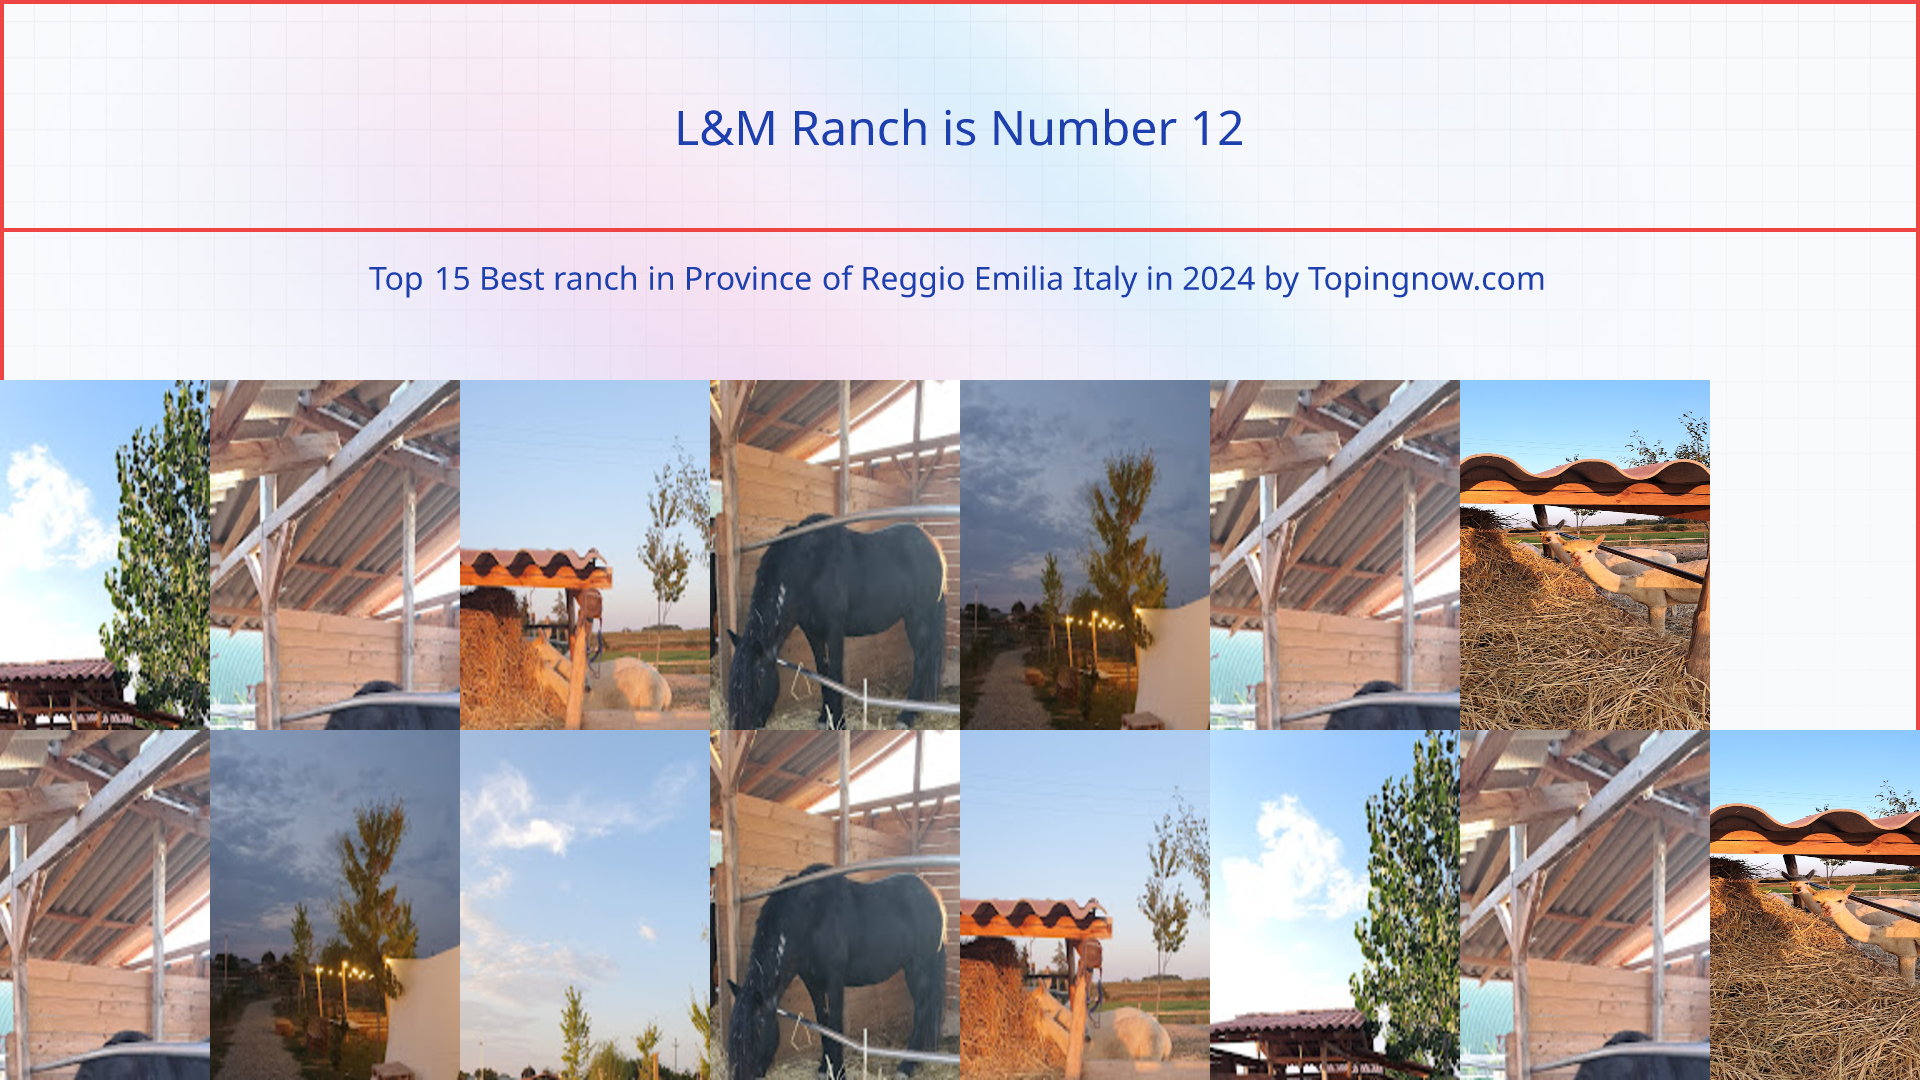 L&M Ranch: Top 15 Best ranch in Province of Reggio Emilia Italy in 2024